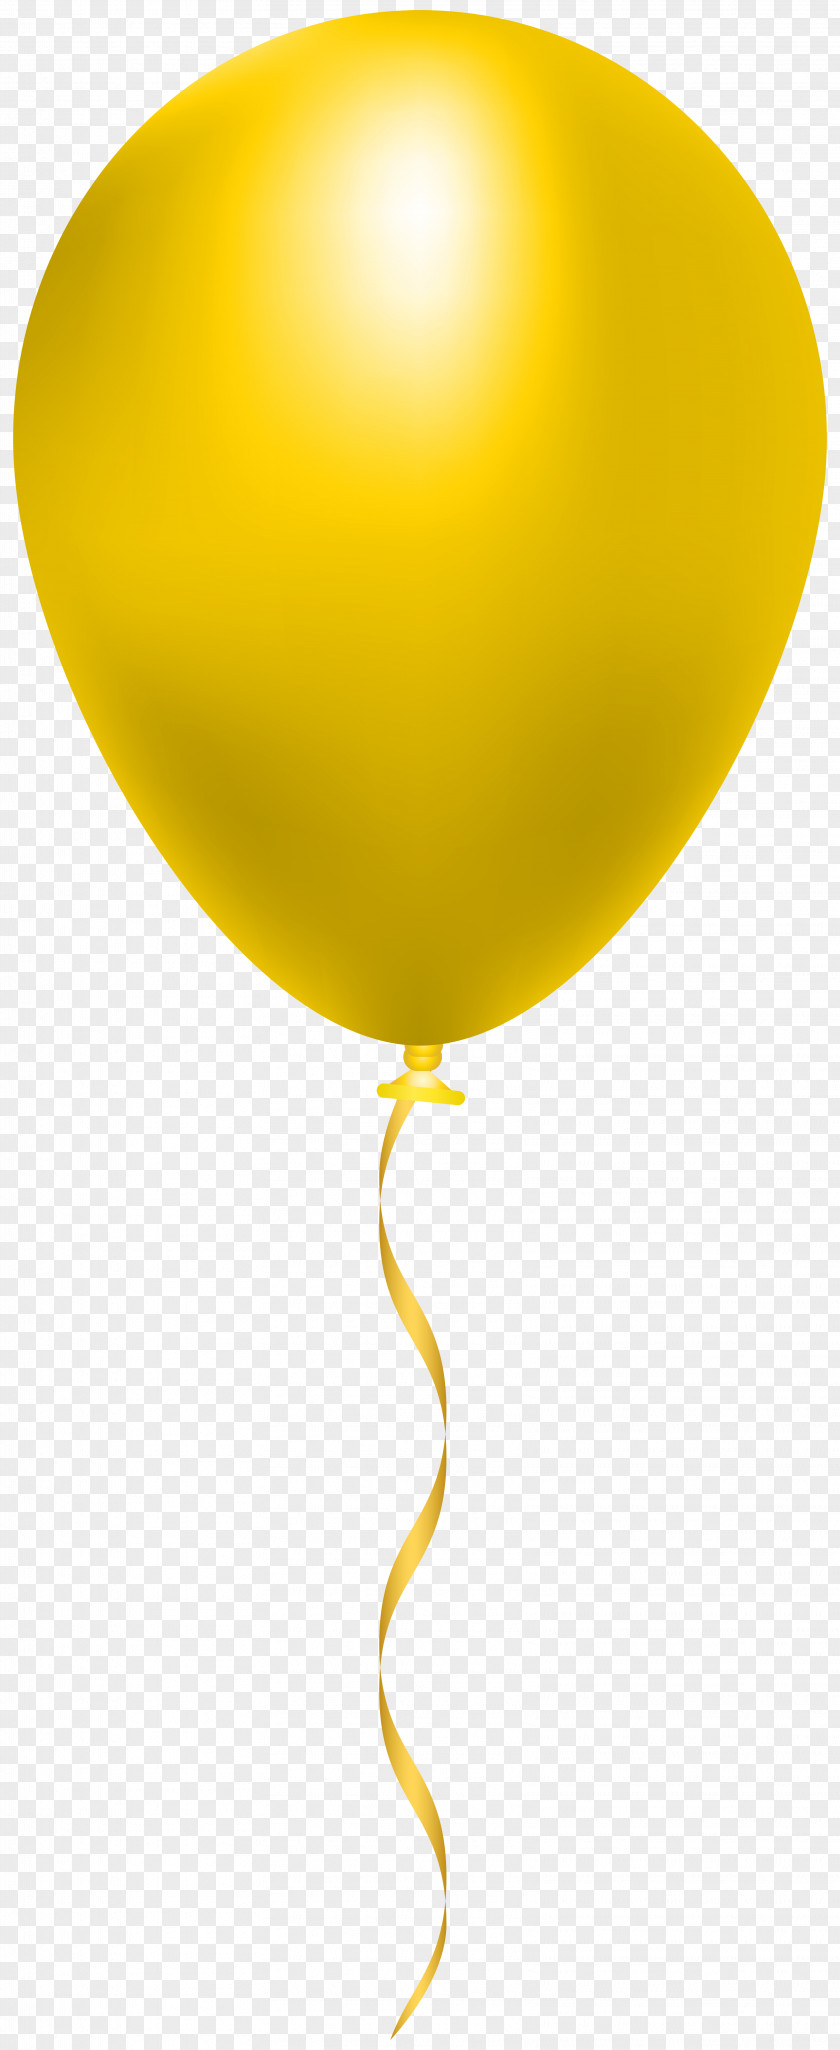 Balloon Clip Art Image JPEG PNG